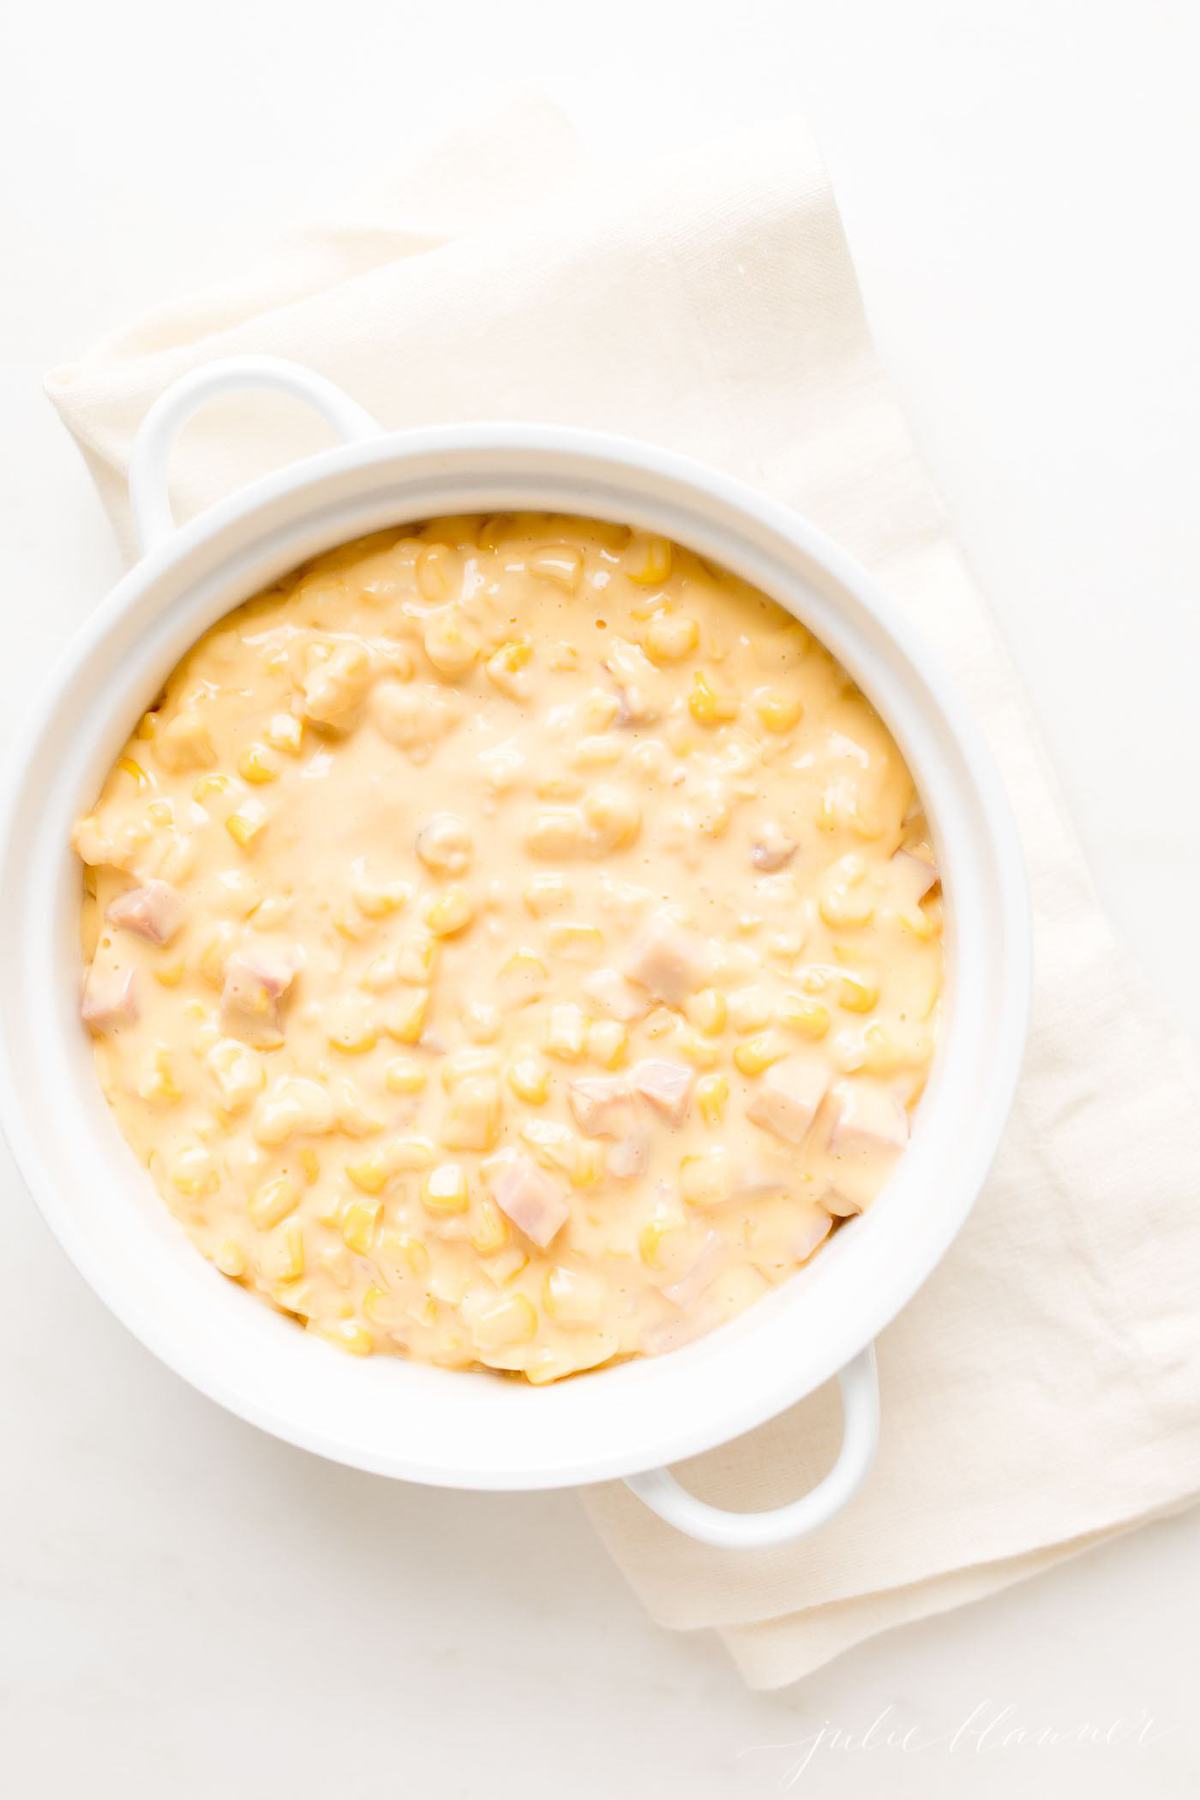 A white casserole dish filled with creamy corn casserole.